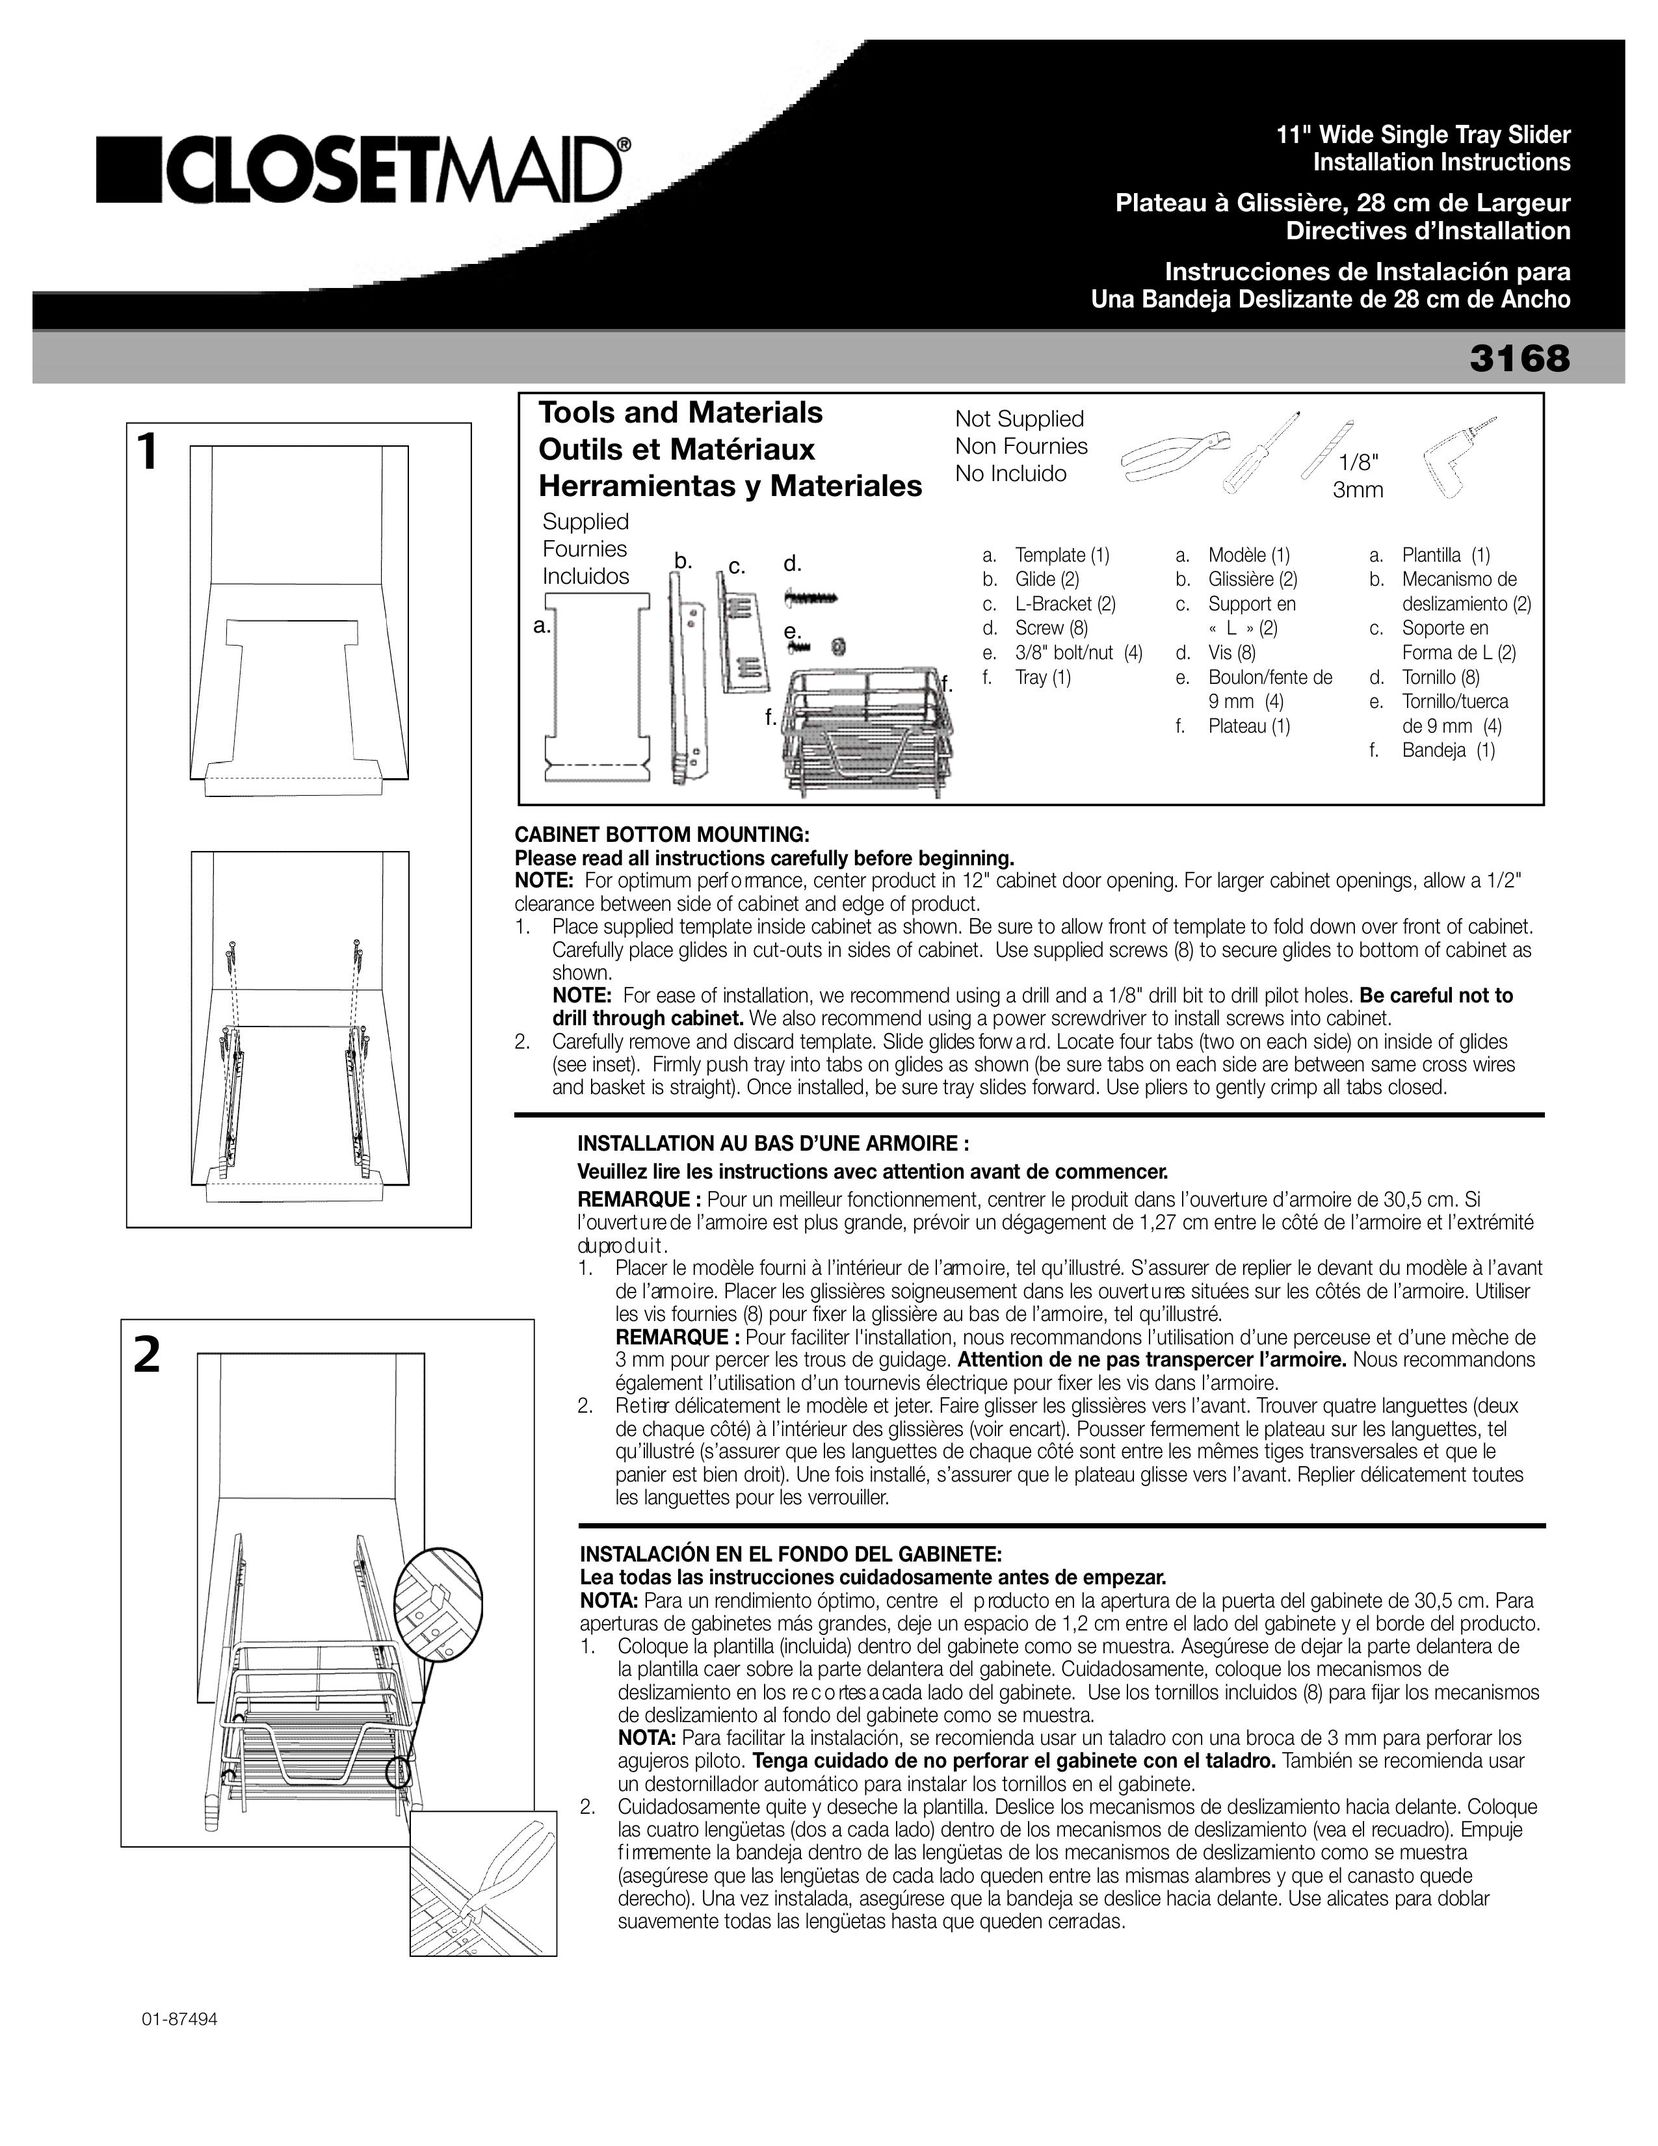 Closet Maid 3168 Indoor Furnishings User Manual